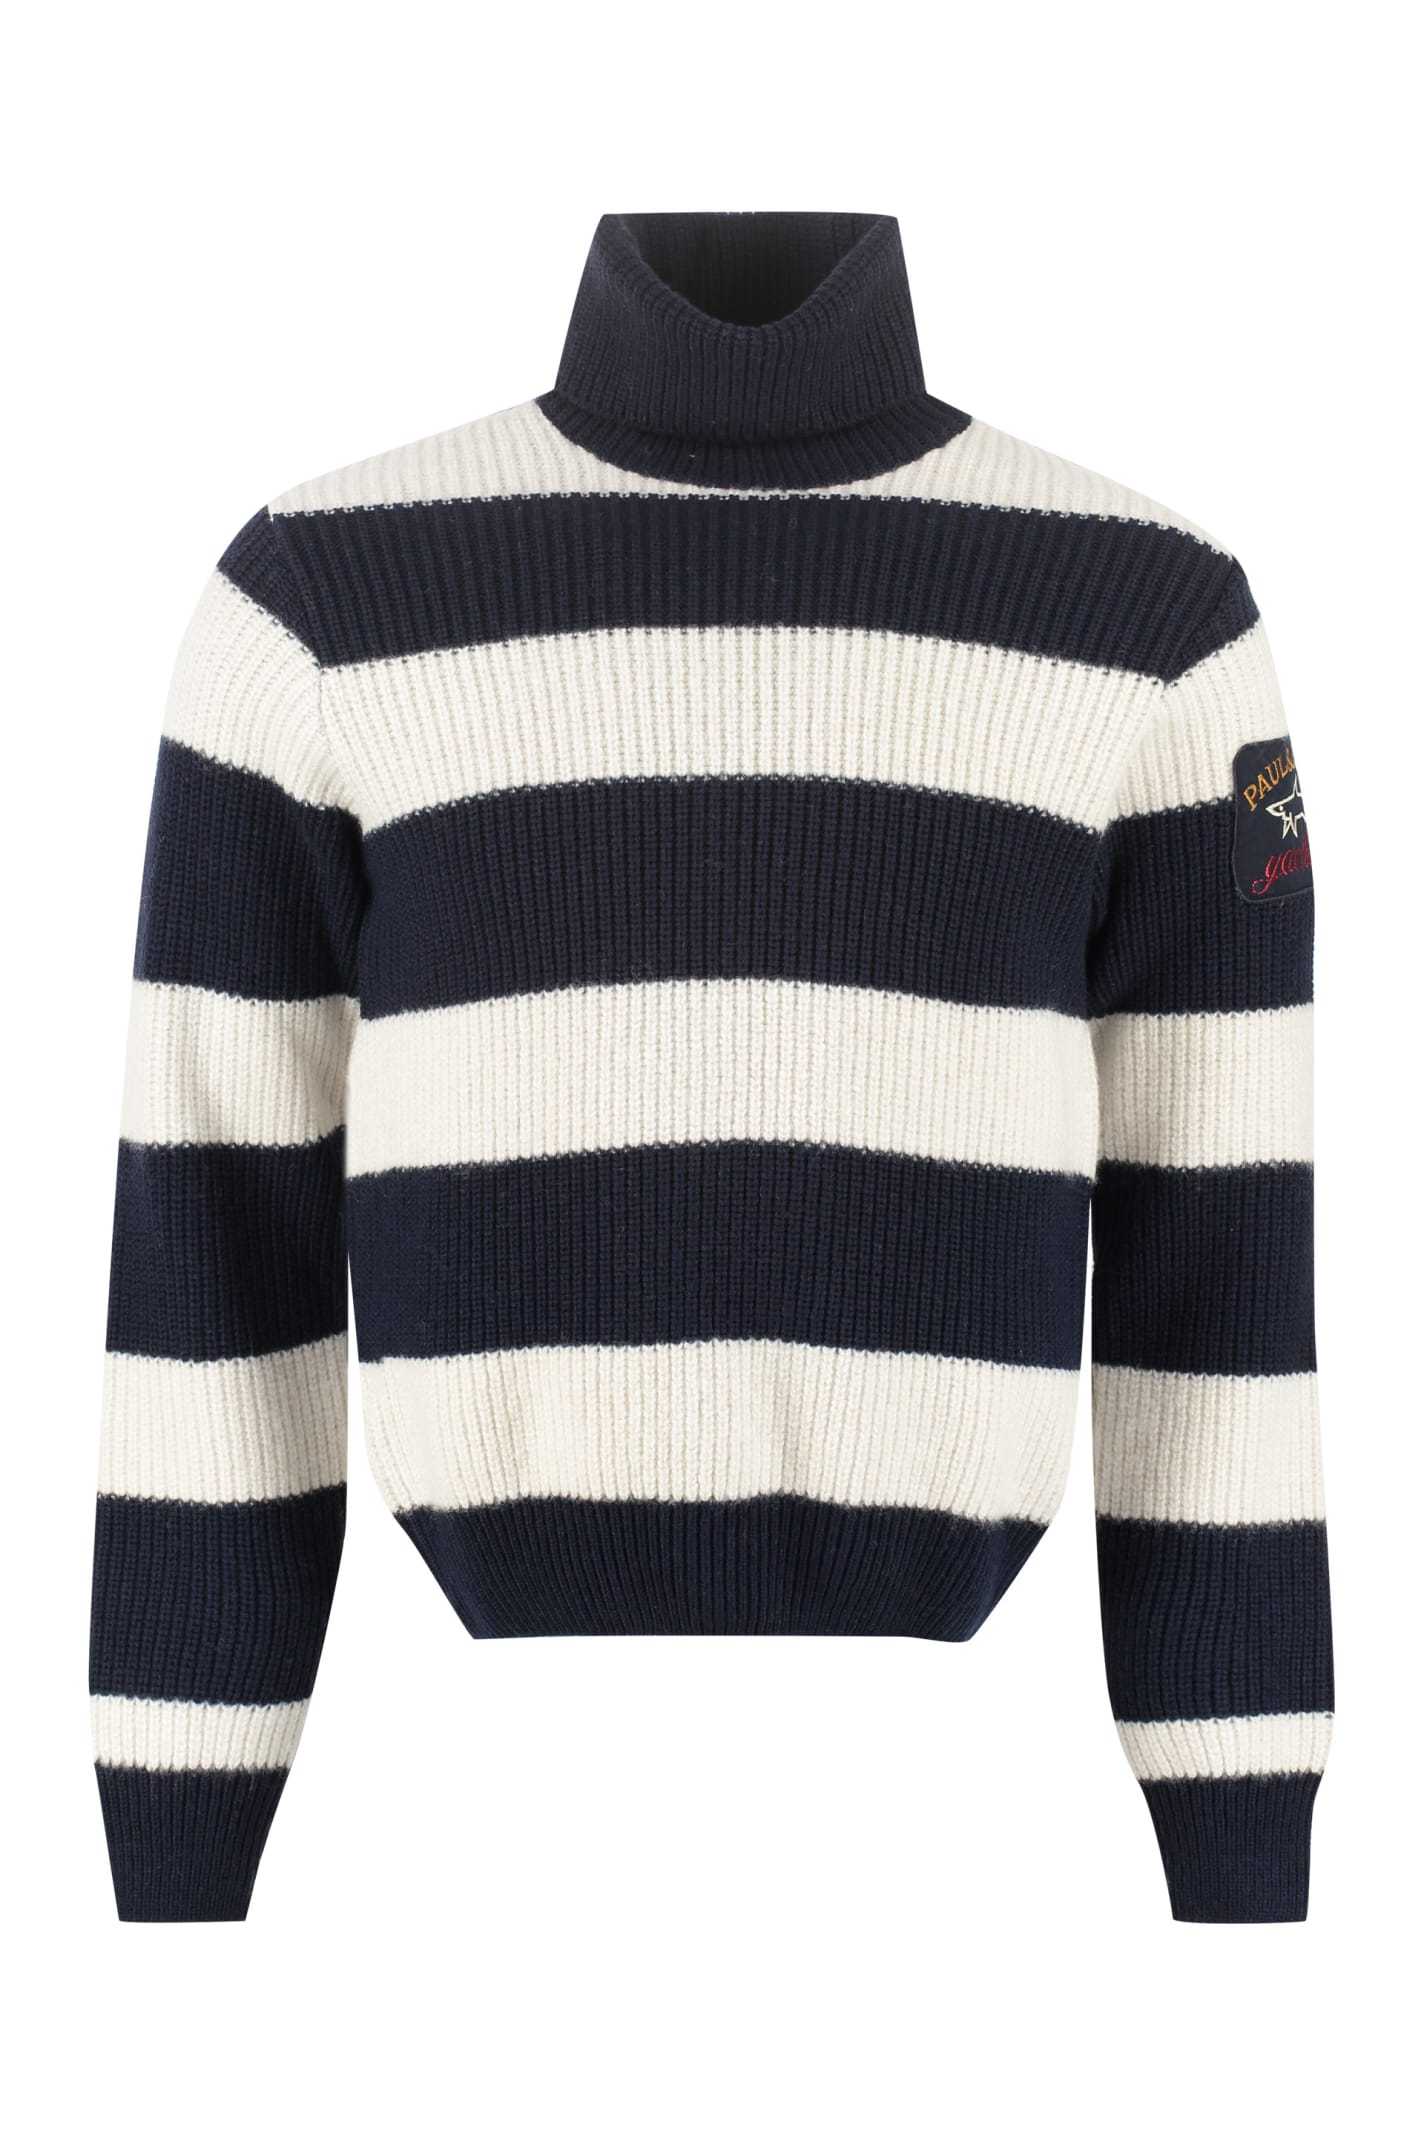 Paul & Shark Striped Turtleneck Sweater